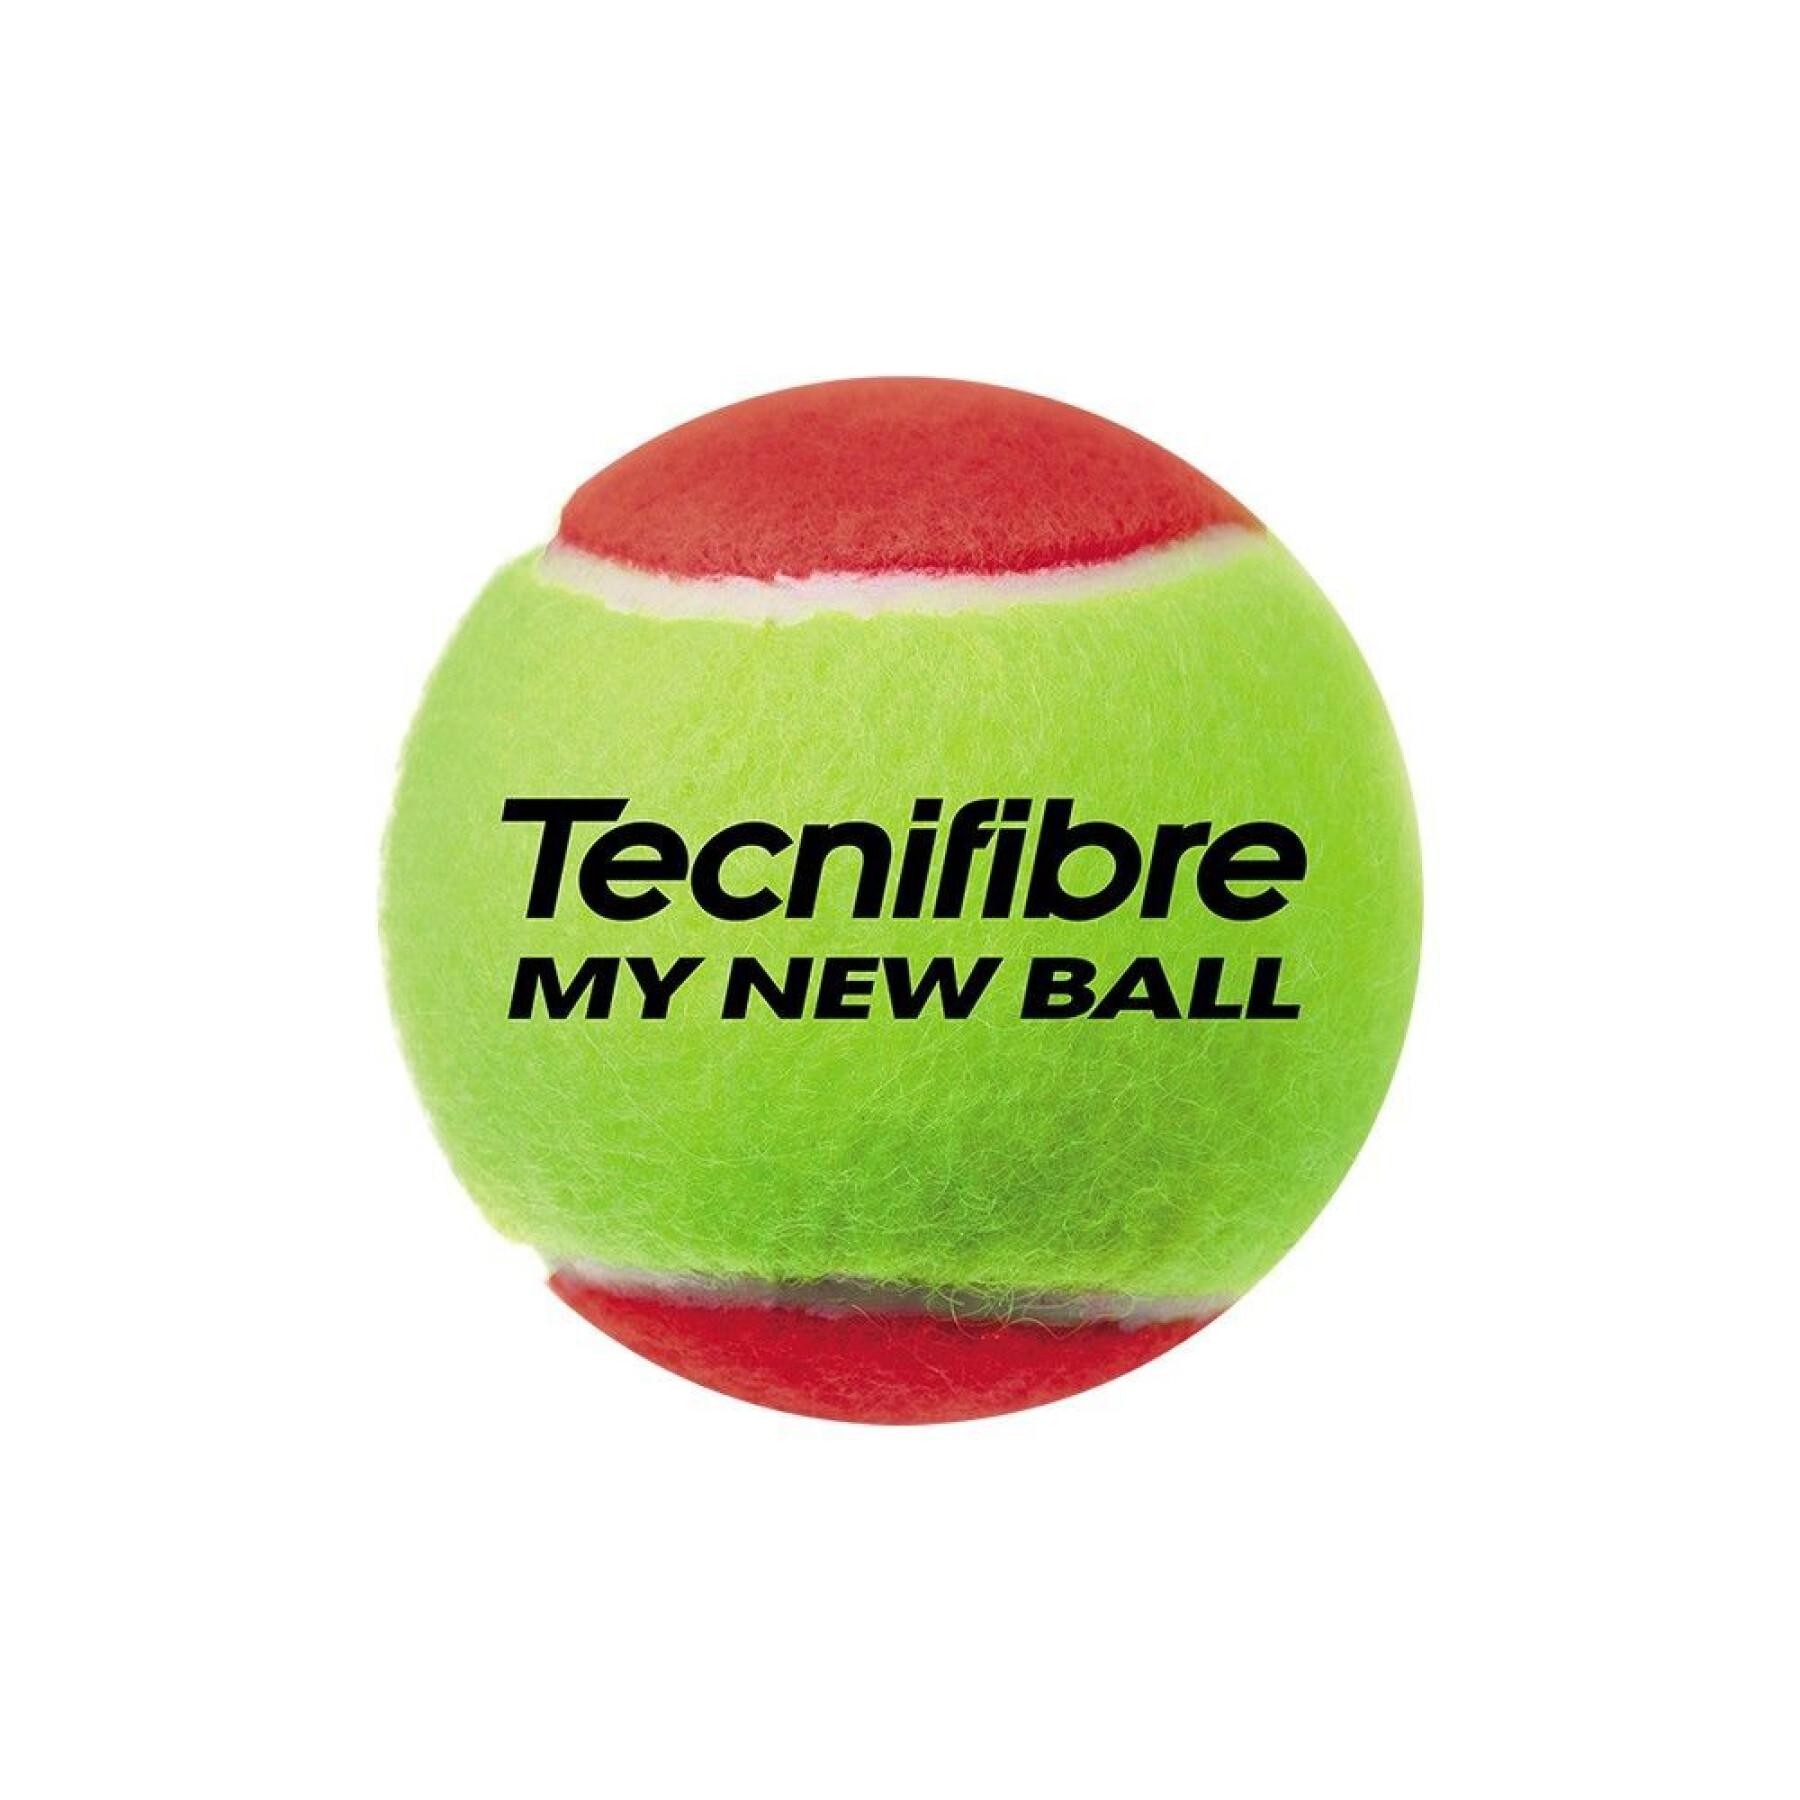 Juego de 36 pelotas de tenis para niños Tecnifibre My new ball